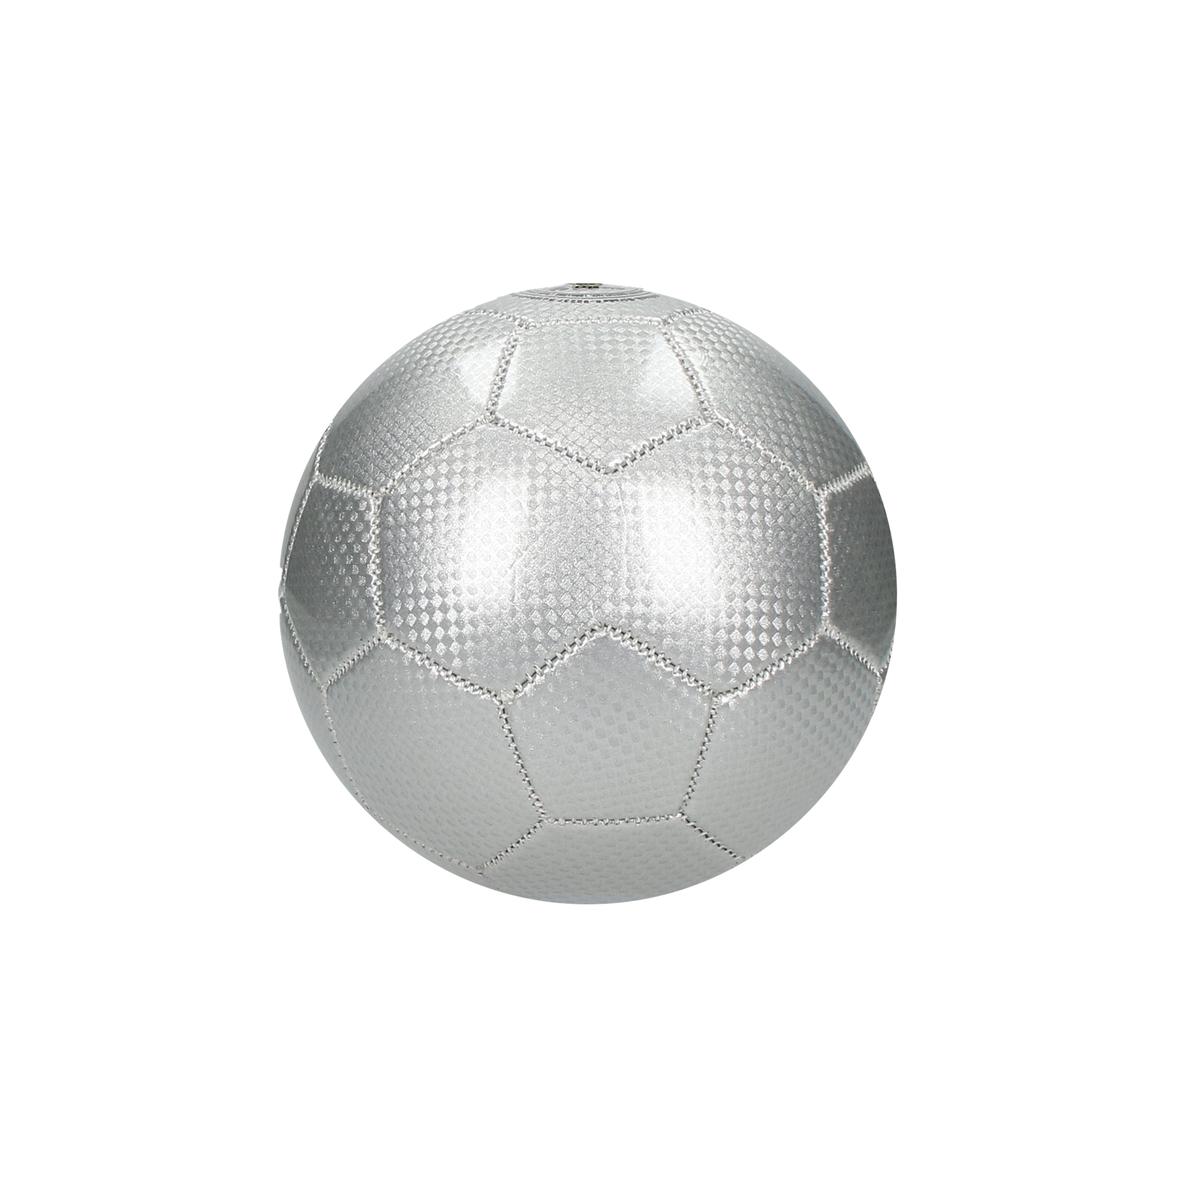 Petit ballon de football personnalisé - Thibault - Zaprinta Belgique